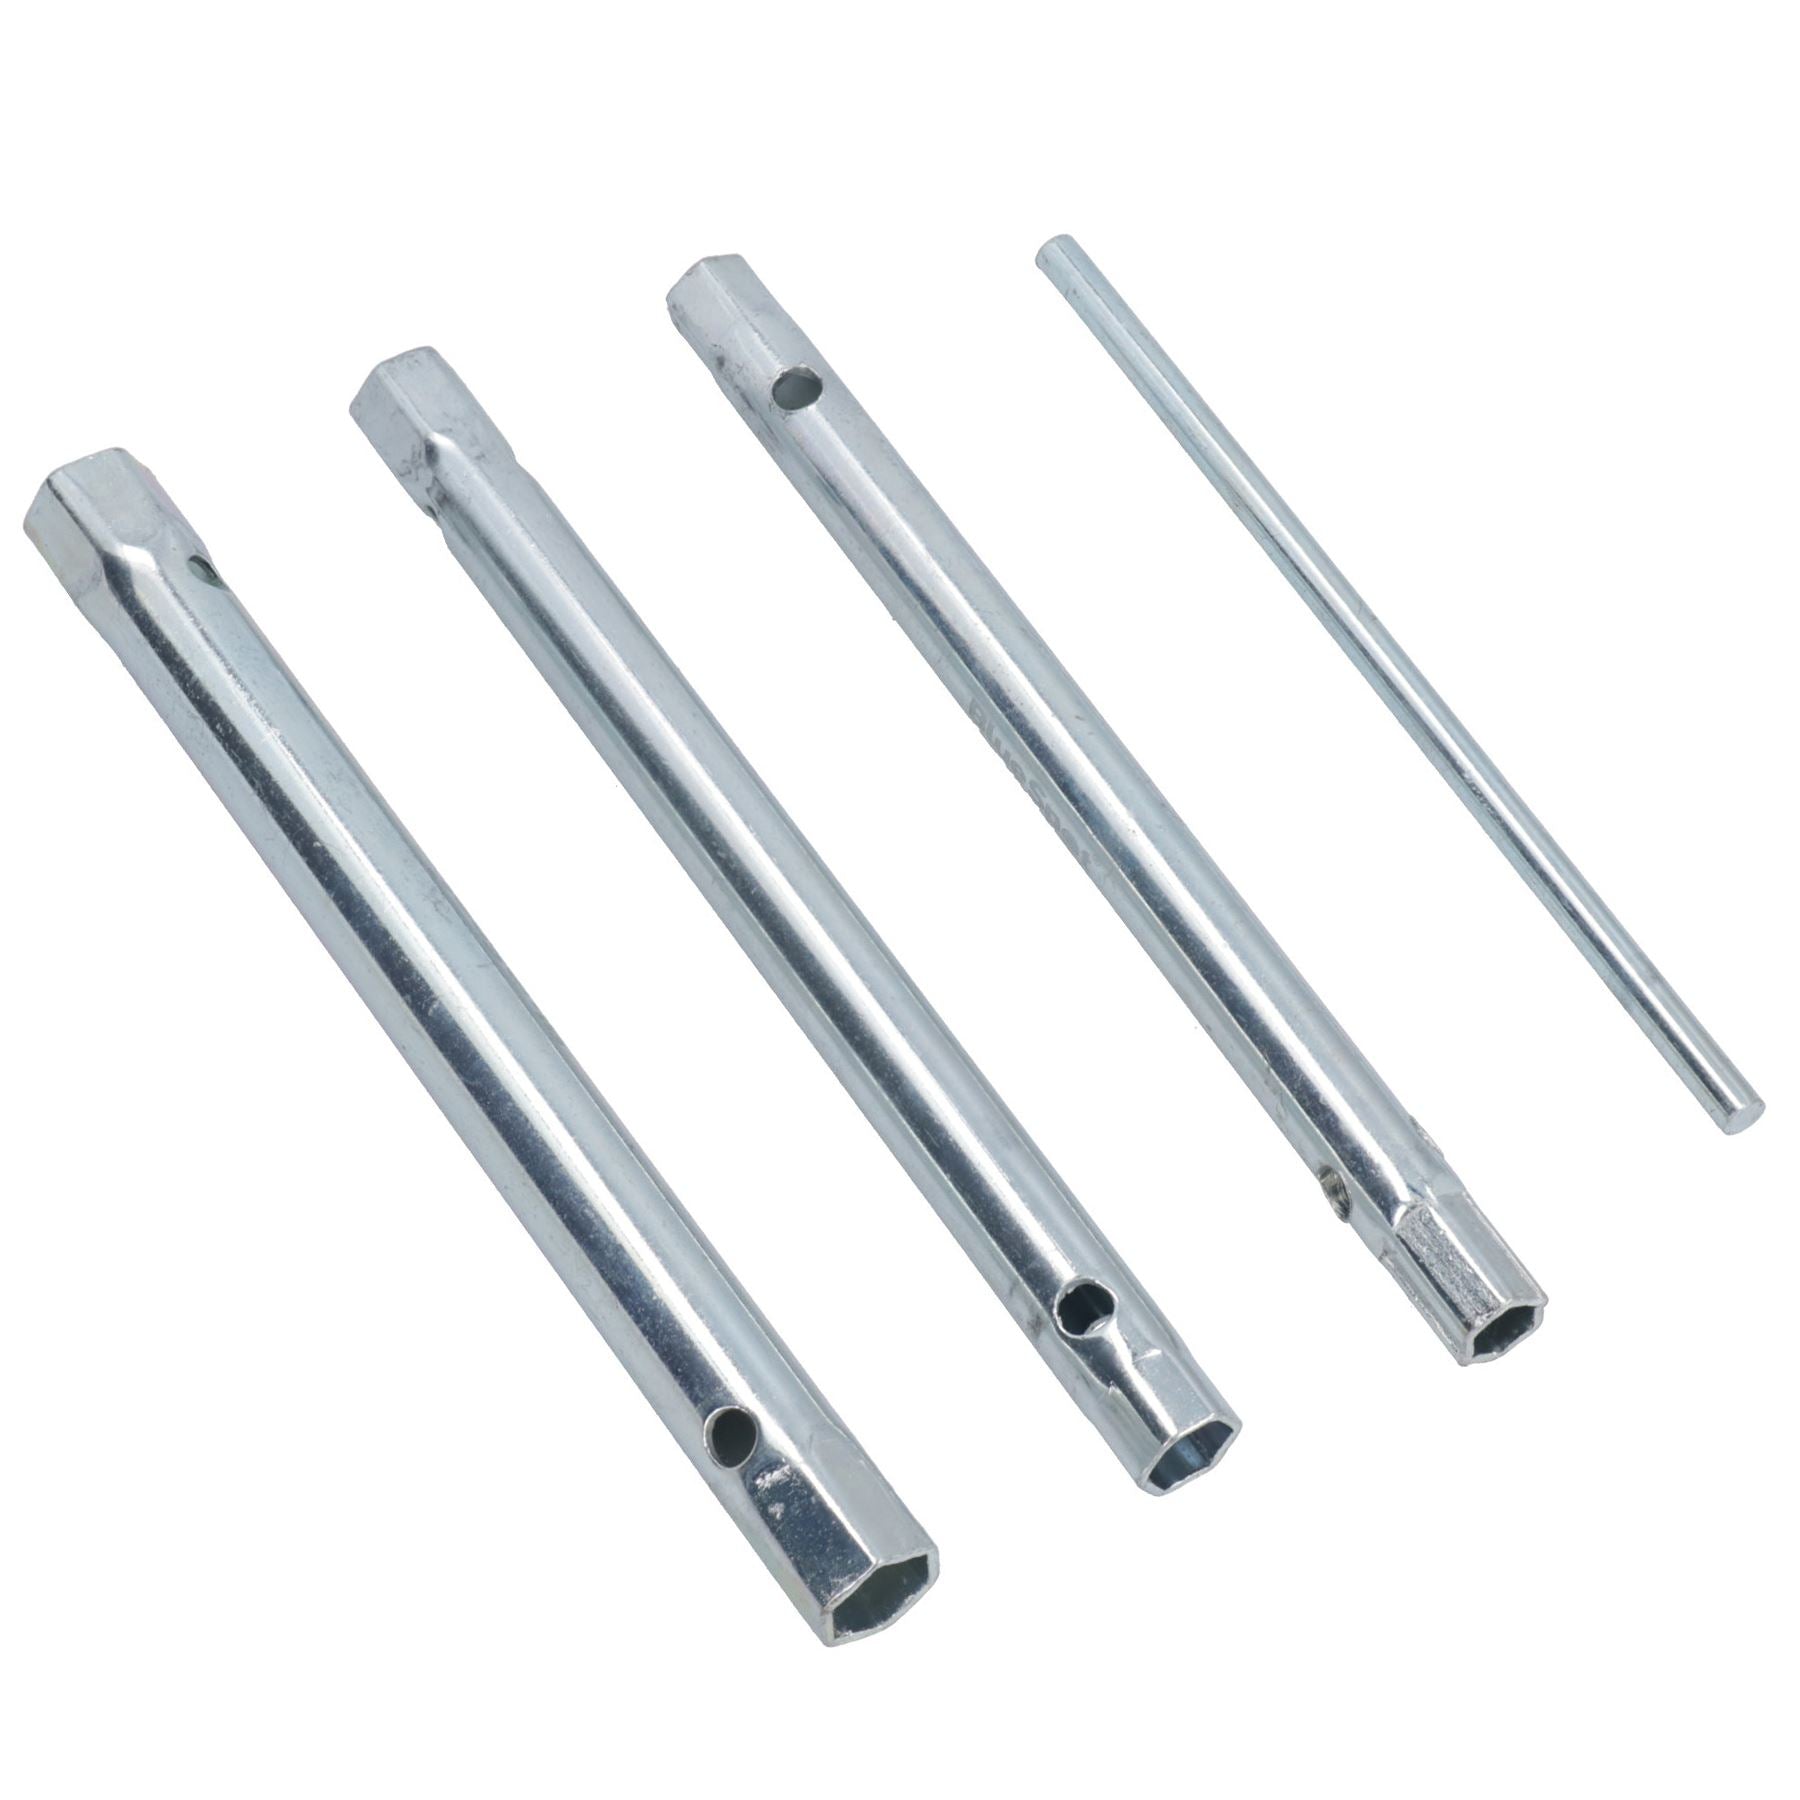 4pc Metric Tubular Box Monoblock Tap Spanner Wrench Plumber Bar 8 – 13mm